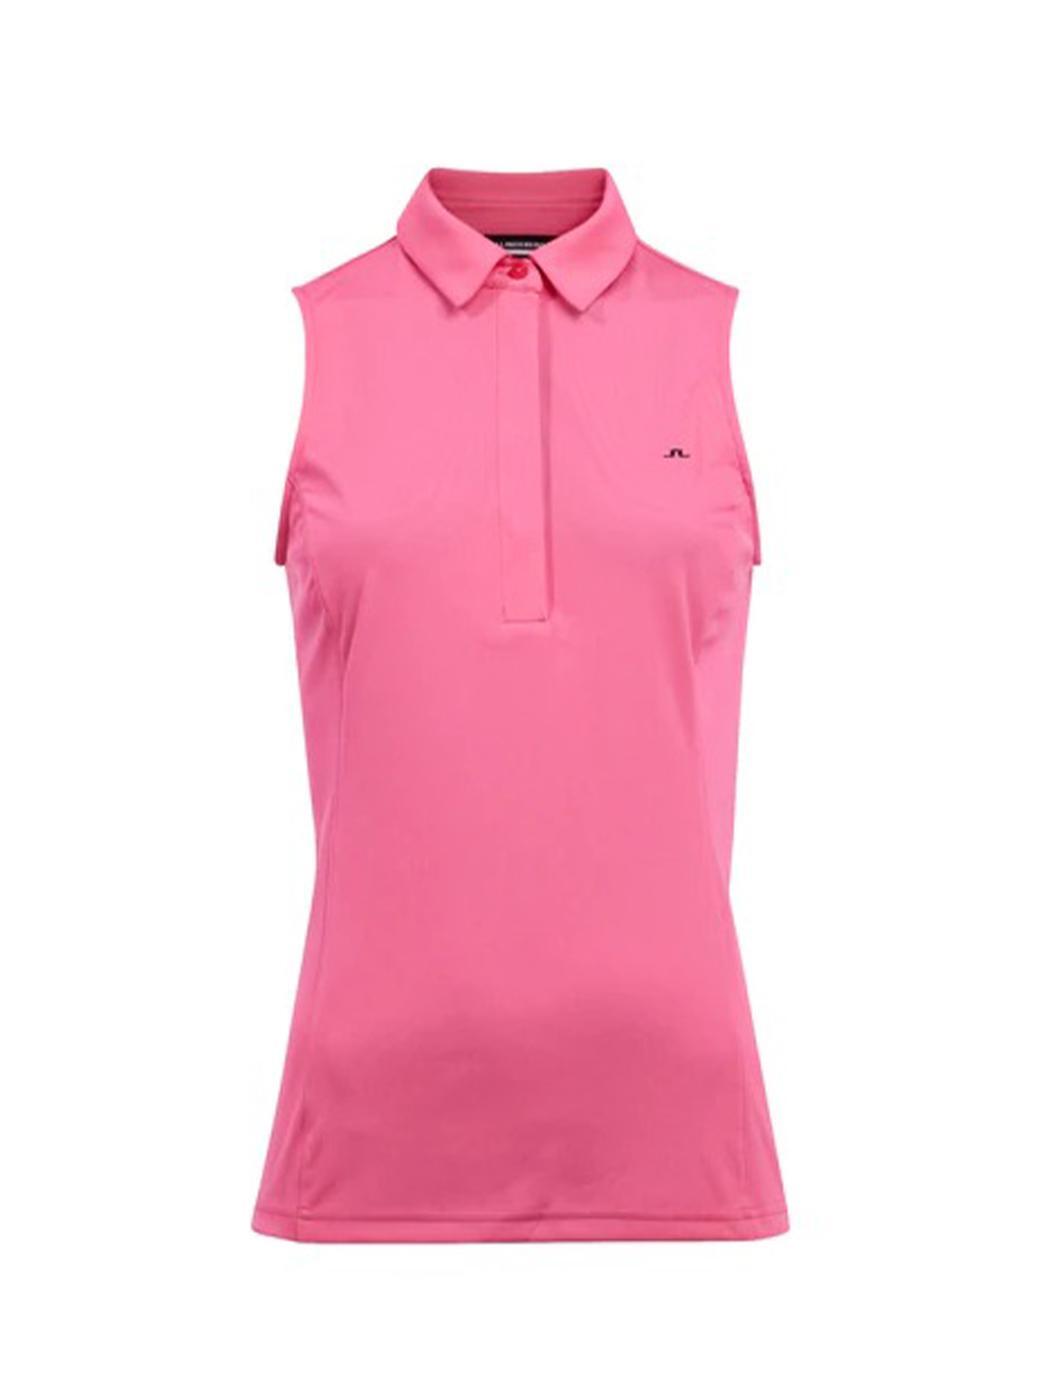 Jaylindberg sleeveless golf T-shirt Dena sleeveless (hot pink)